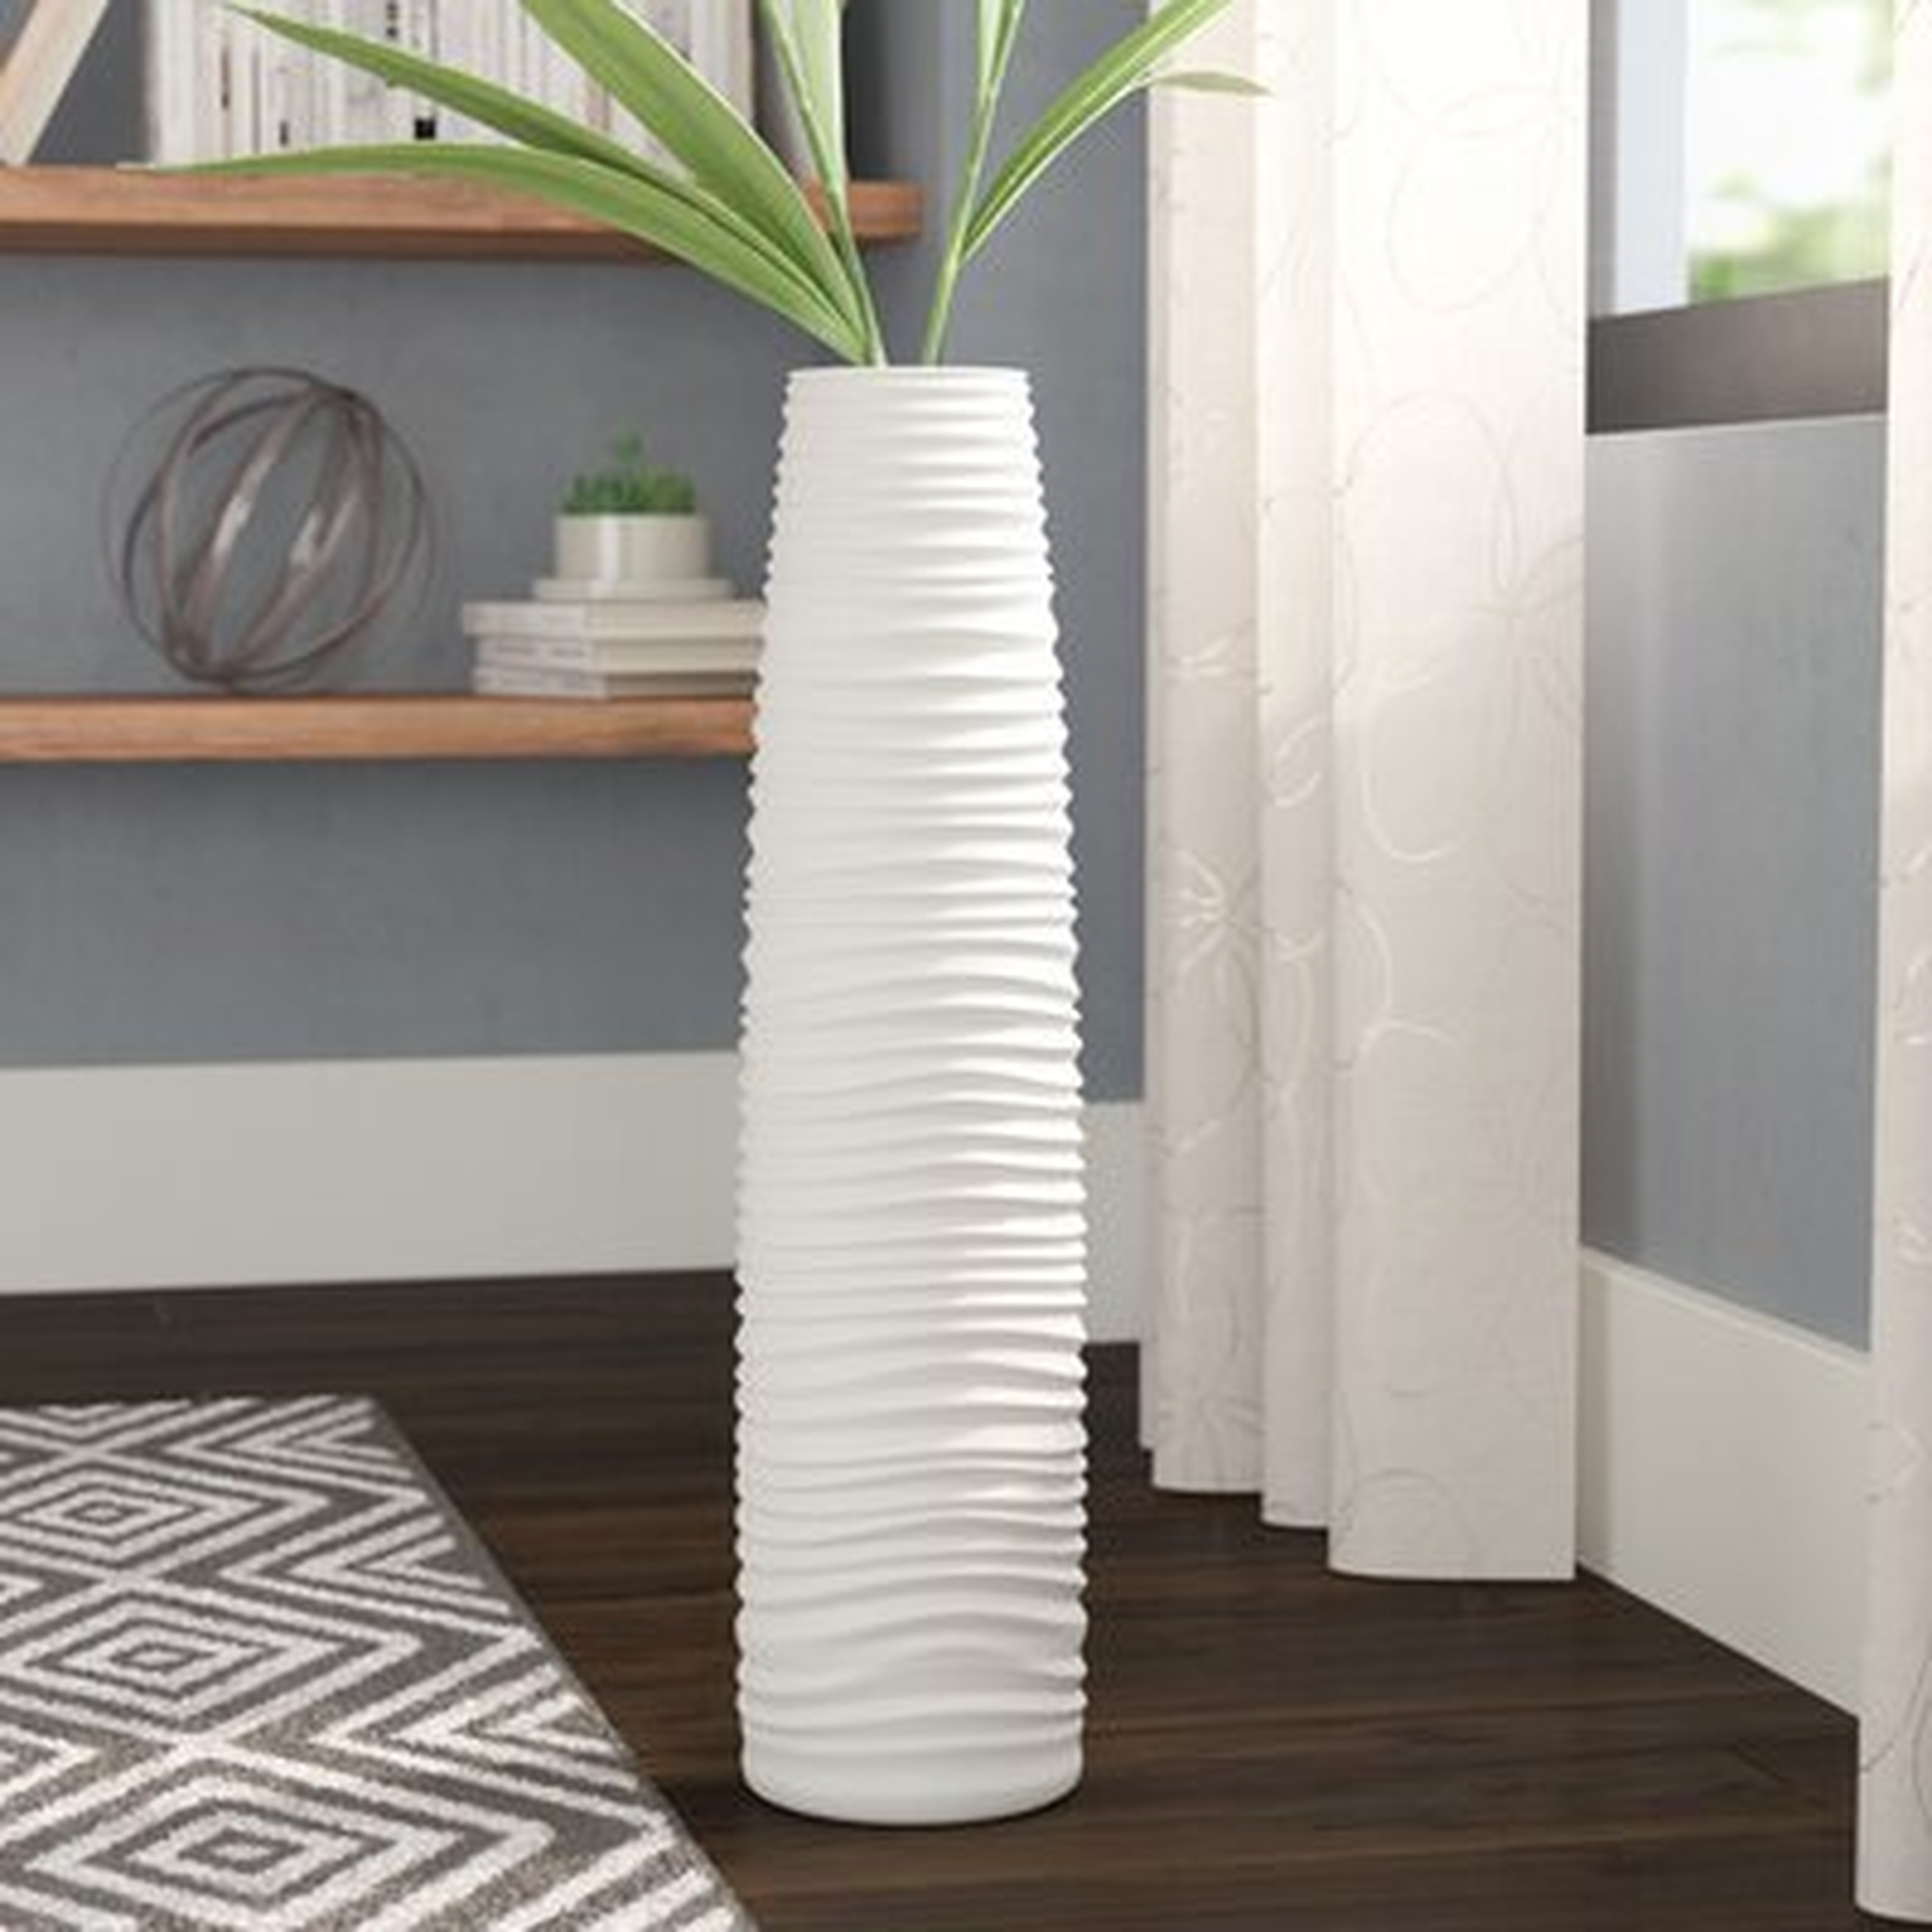 Ceramic Floor Vase - Wayfair